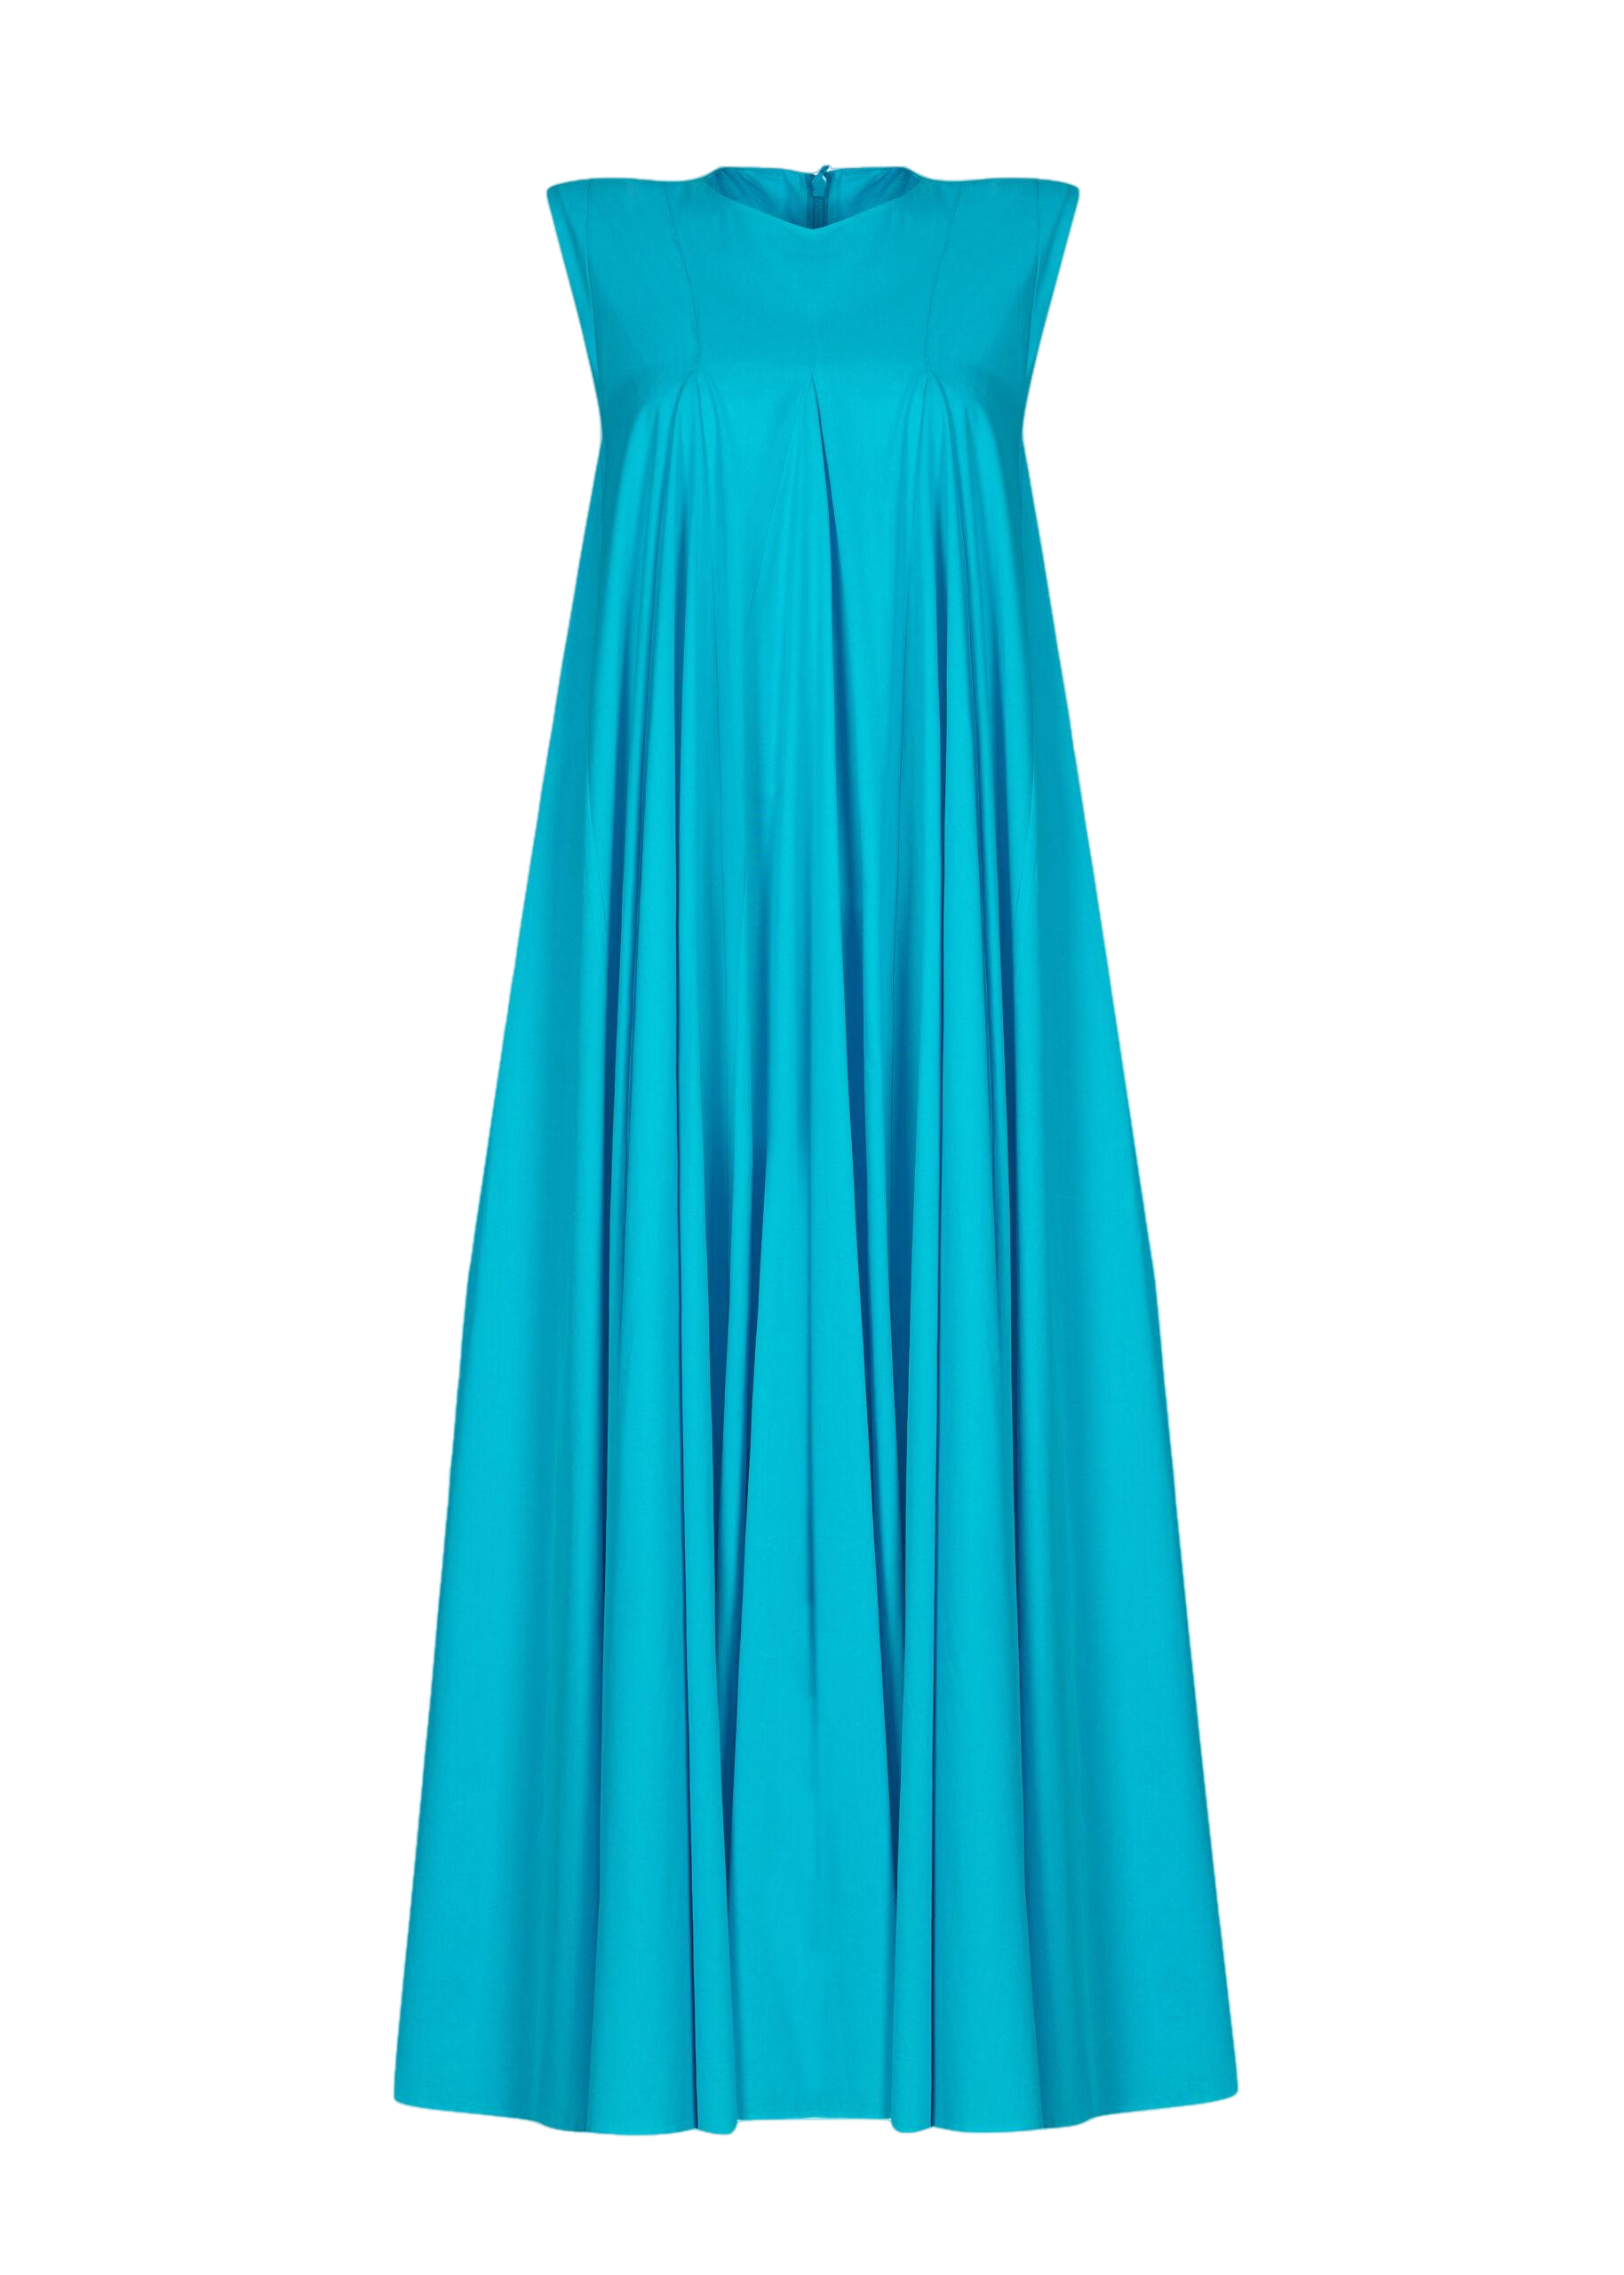 F.ilkk Scuba Blue Voluminous Dress